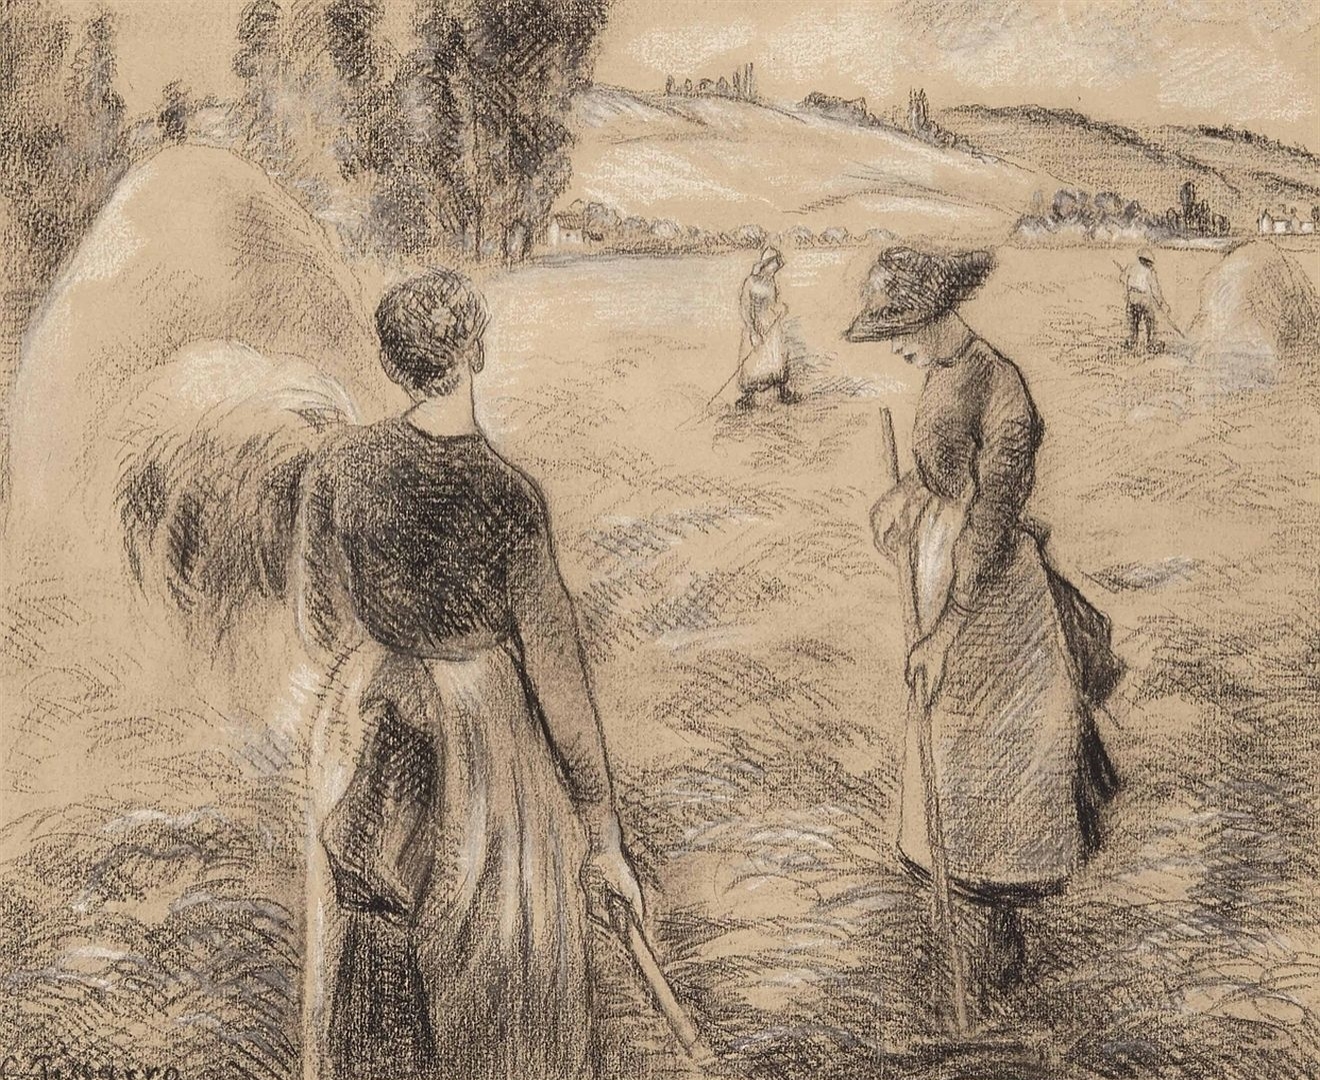 Camille+Pissarro-1830-1903 (344).jpg